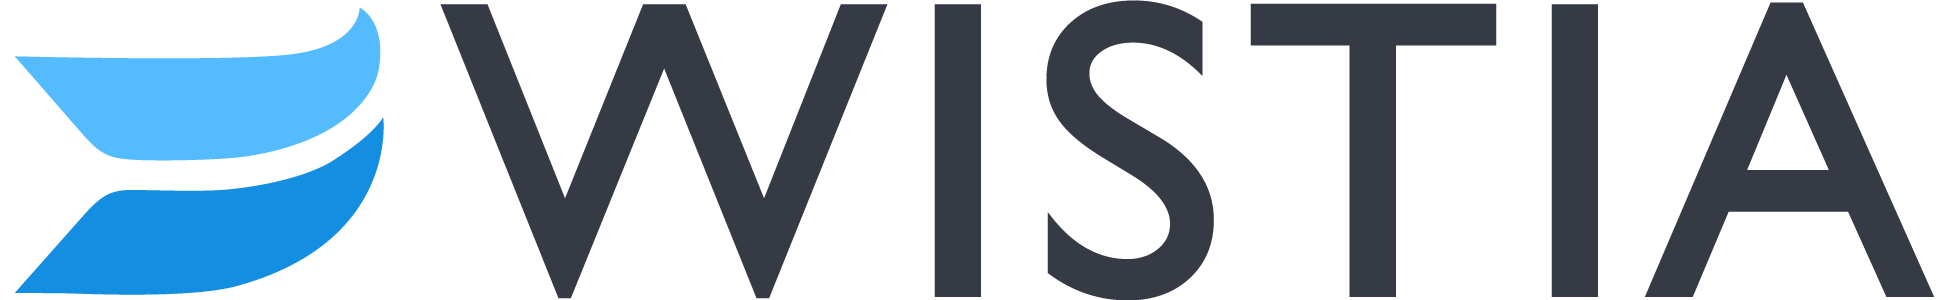 wistia-logo